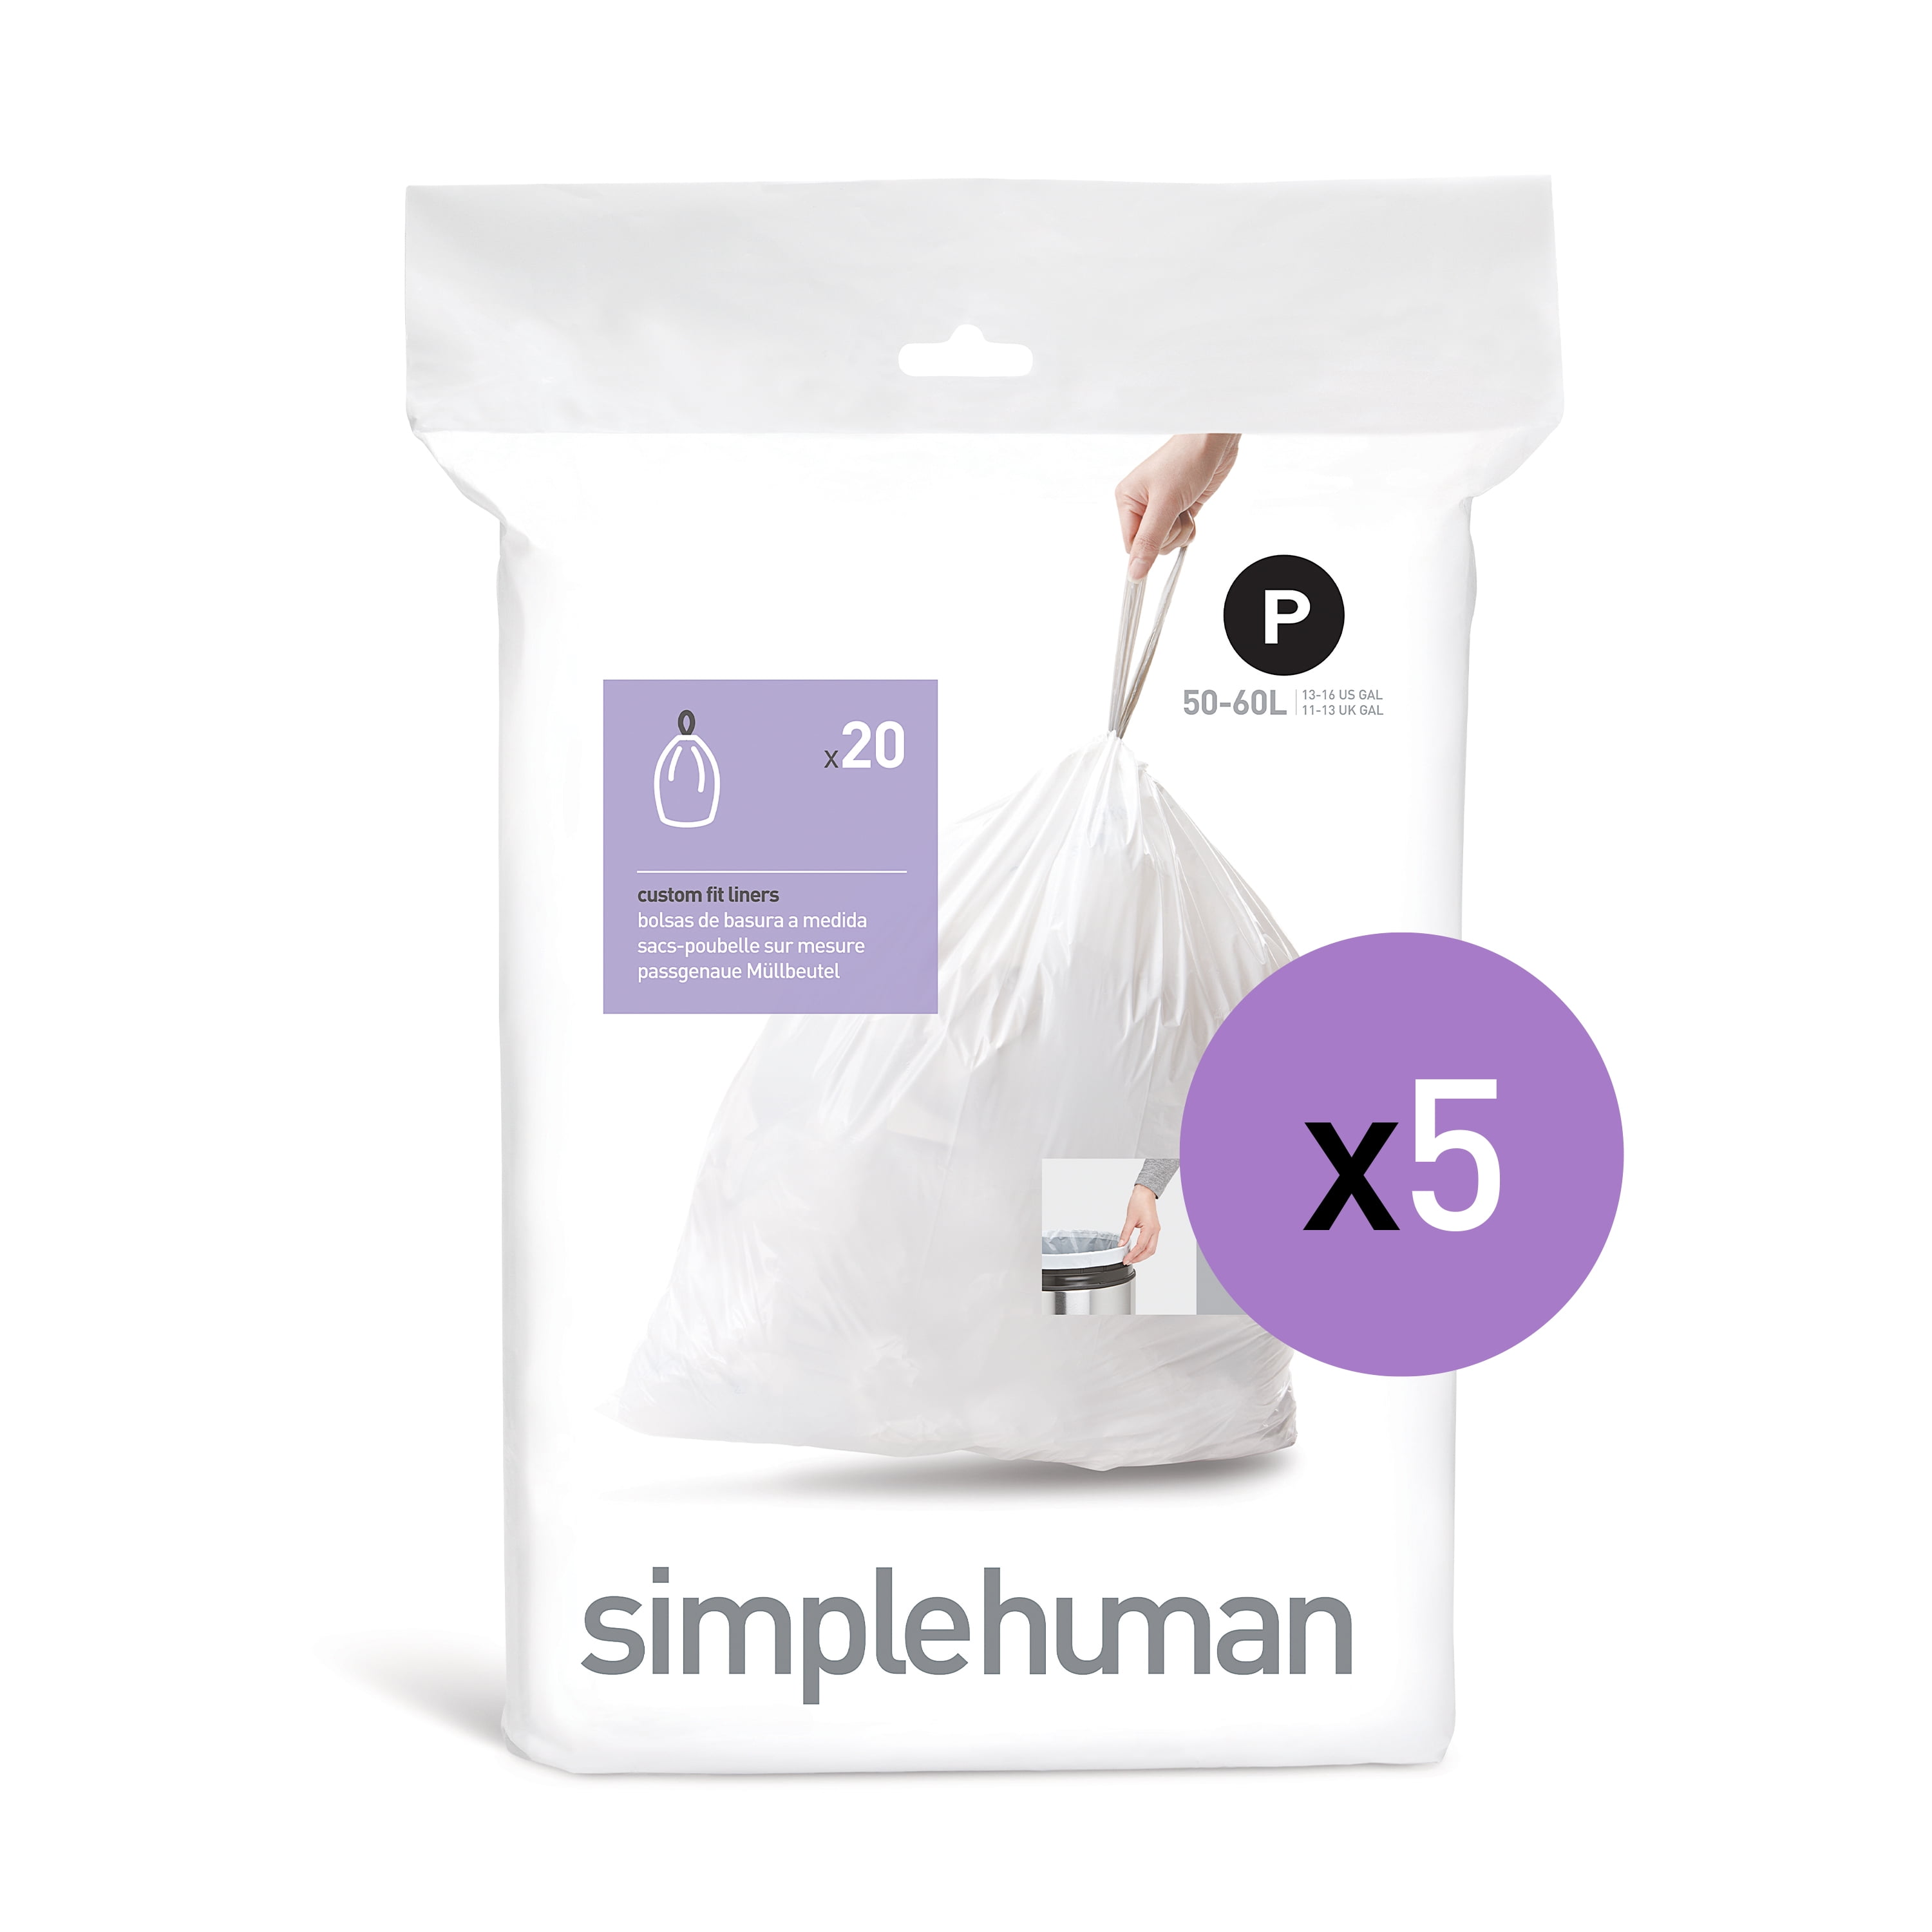 50-60 Liter/13-16 Gallon Trash Bags 100 simplehuman Code P Custom Fit Liners 